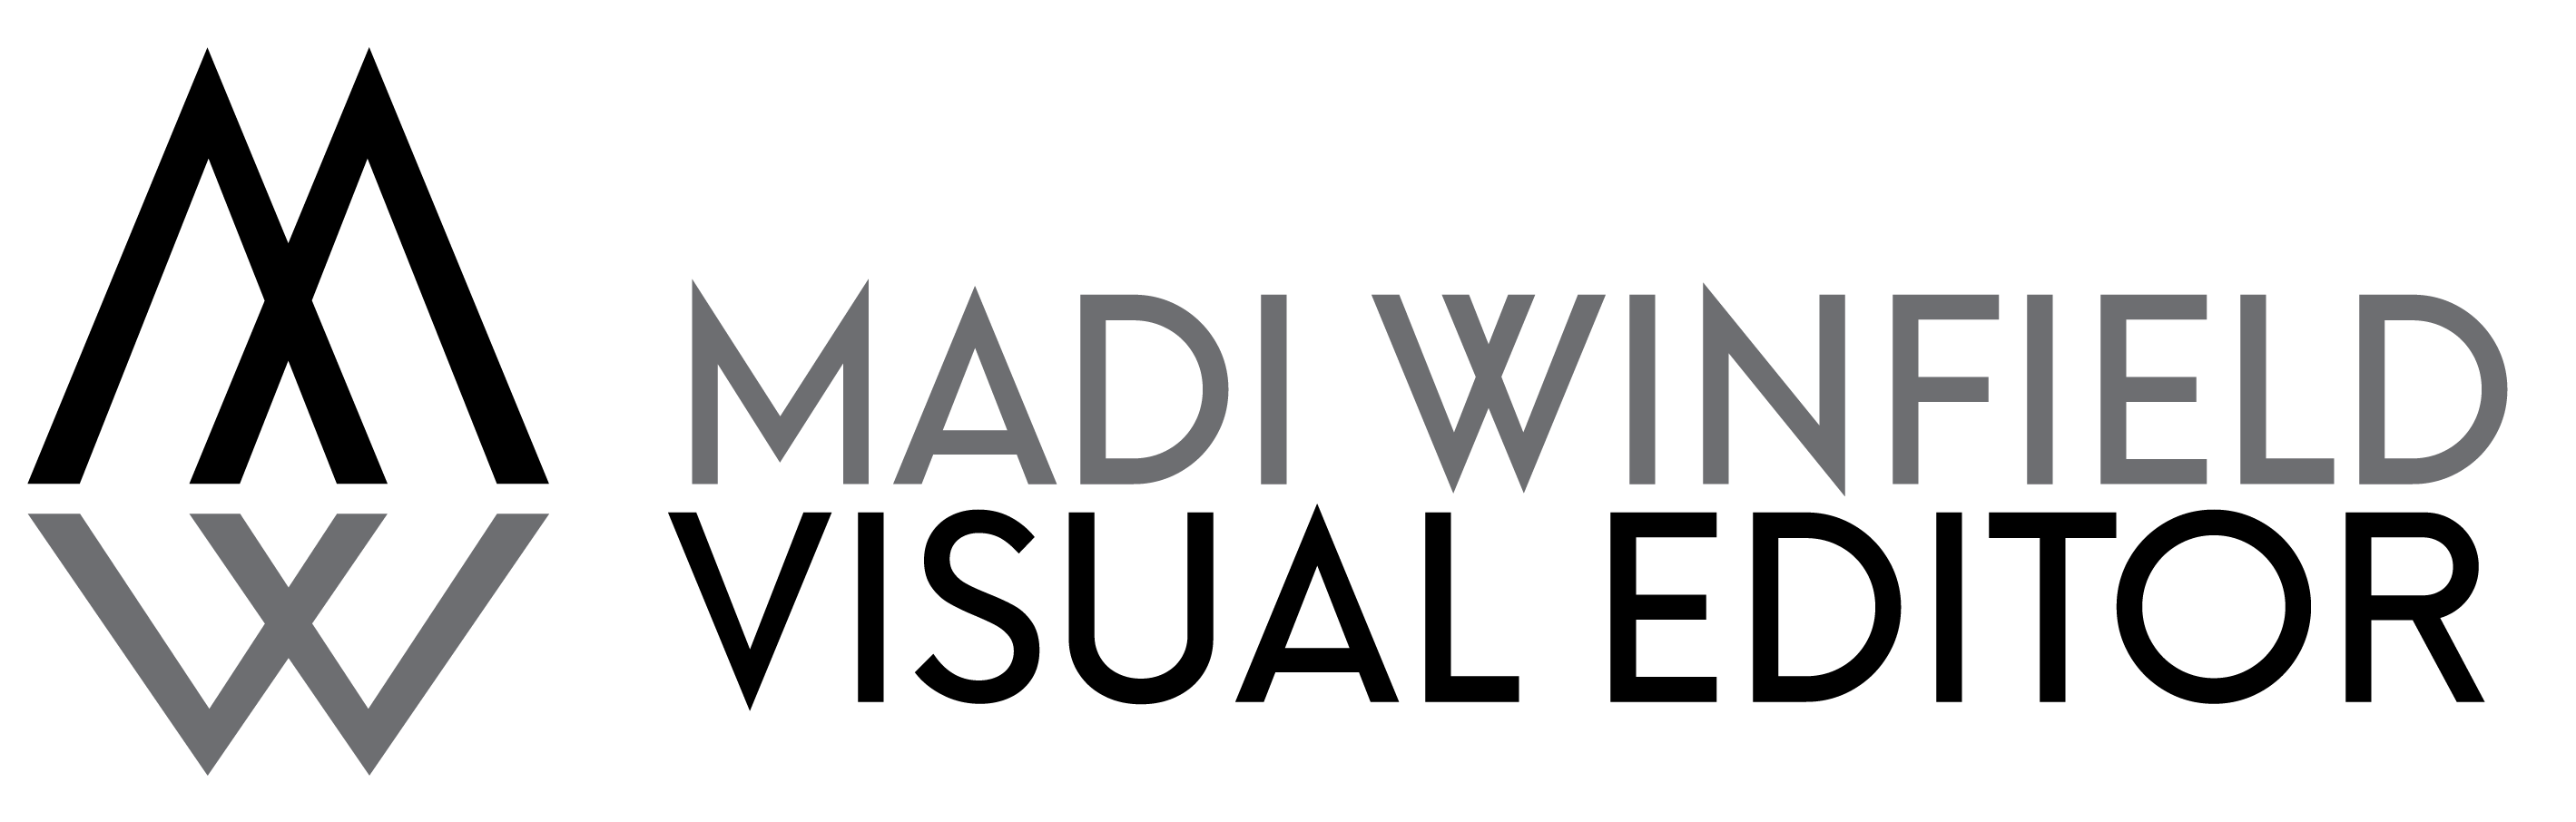 Madi Winfield | Visual Editor